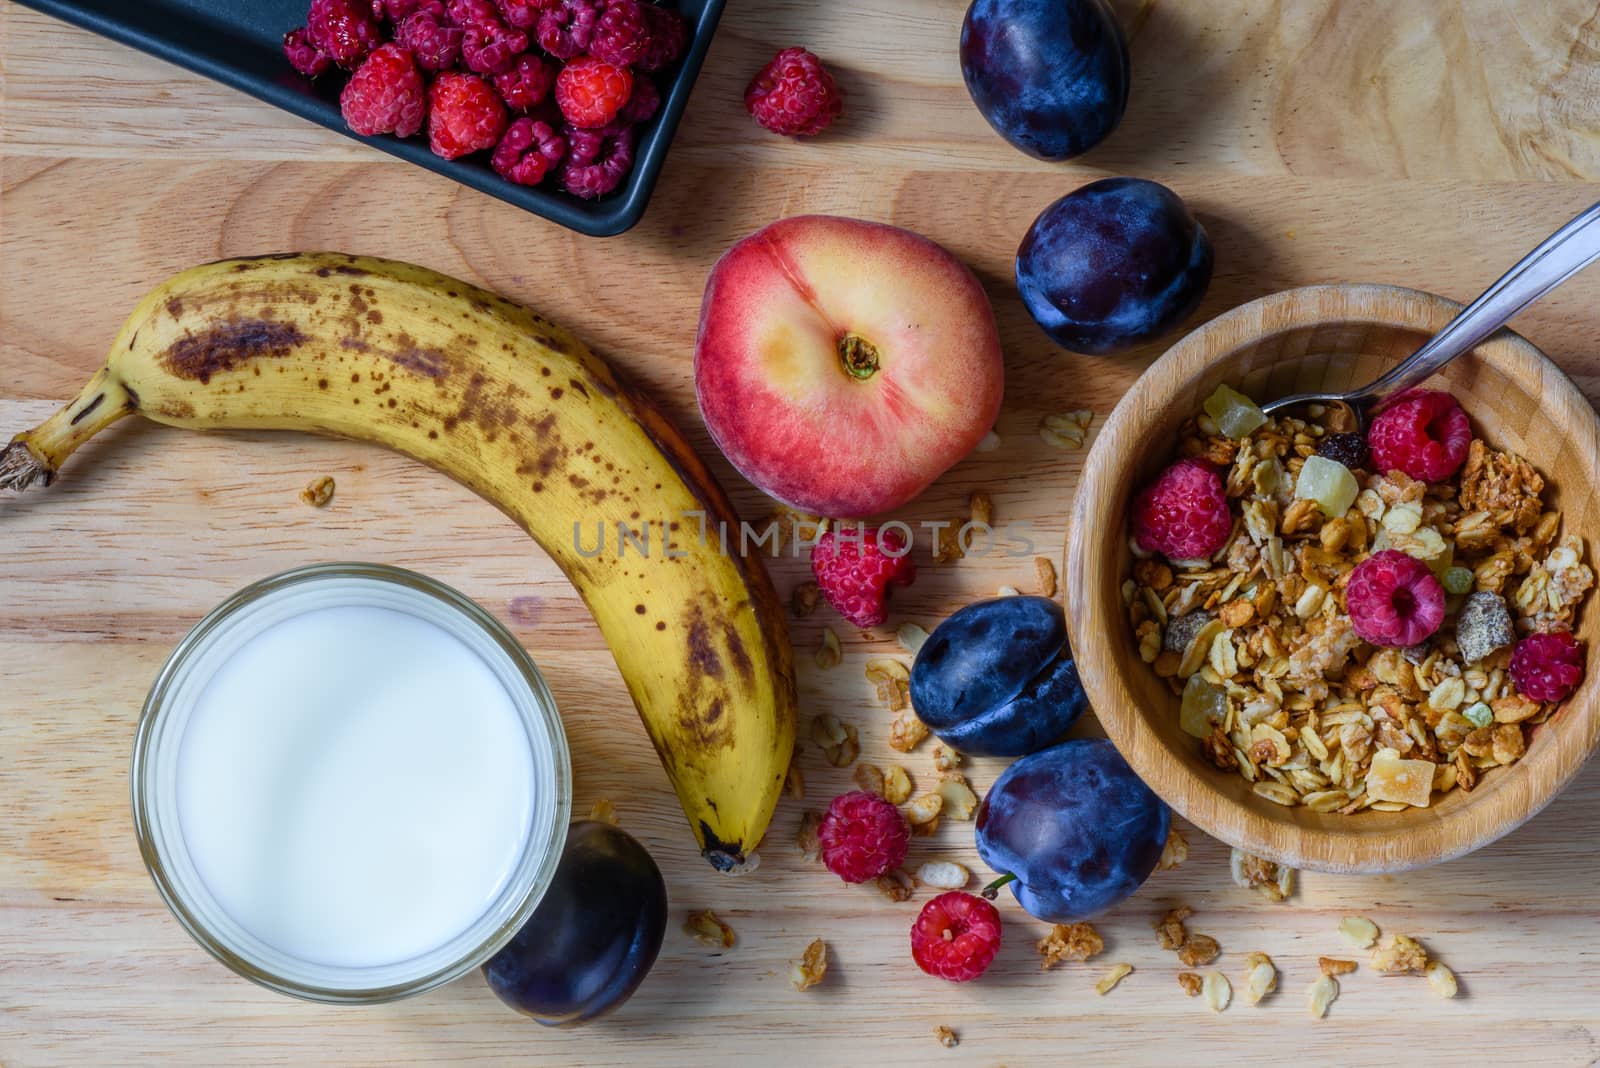 Bowl of muesli with sweet berries, fruits and milk by Seva_blsv